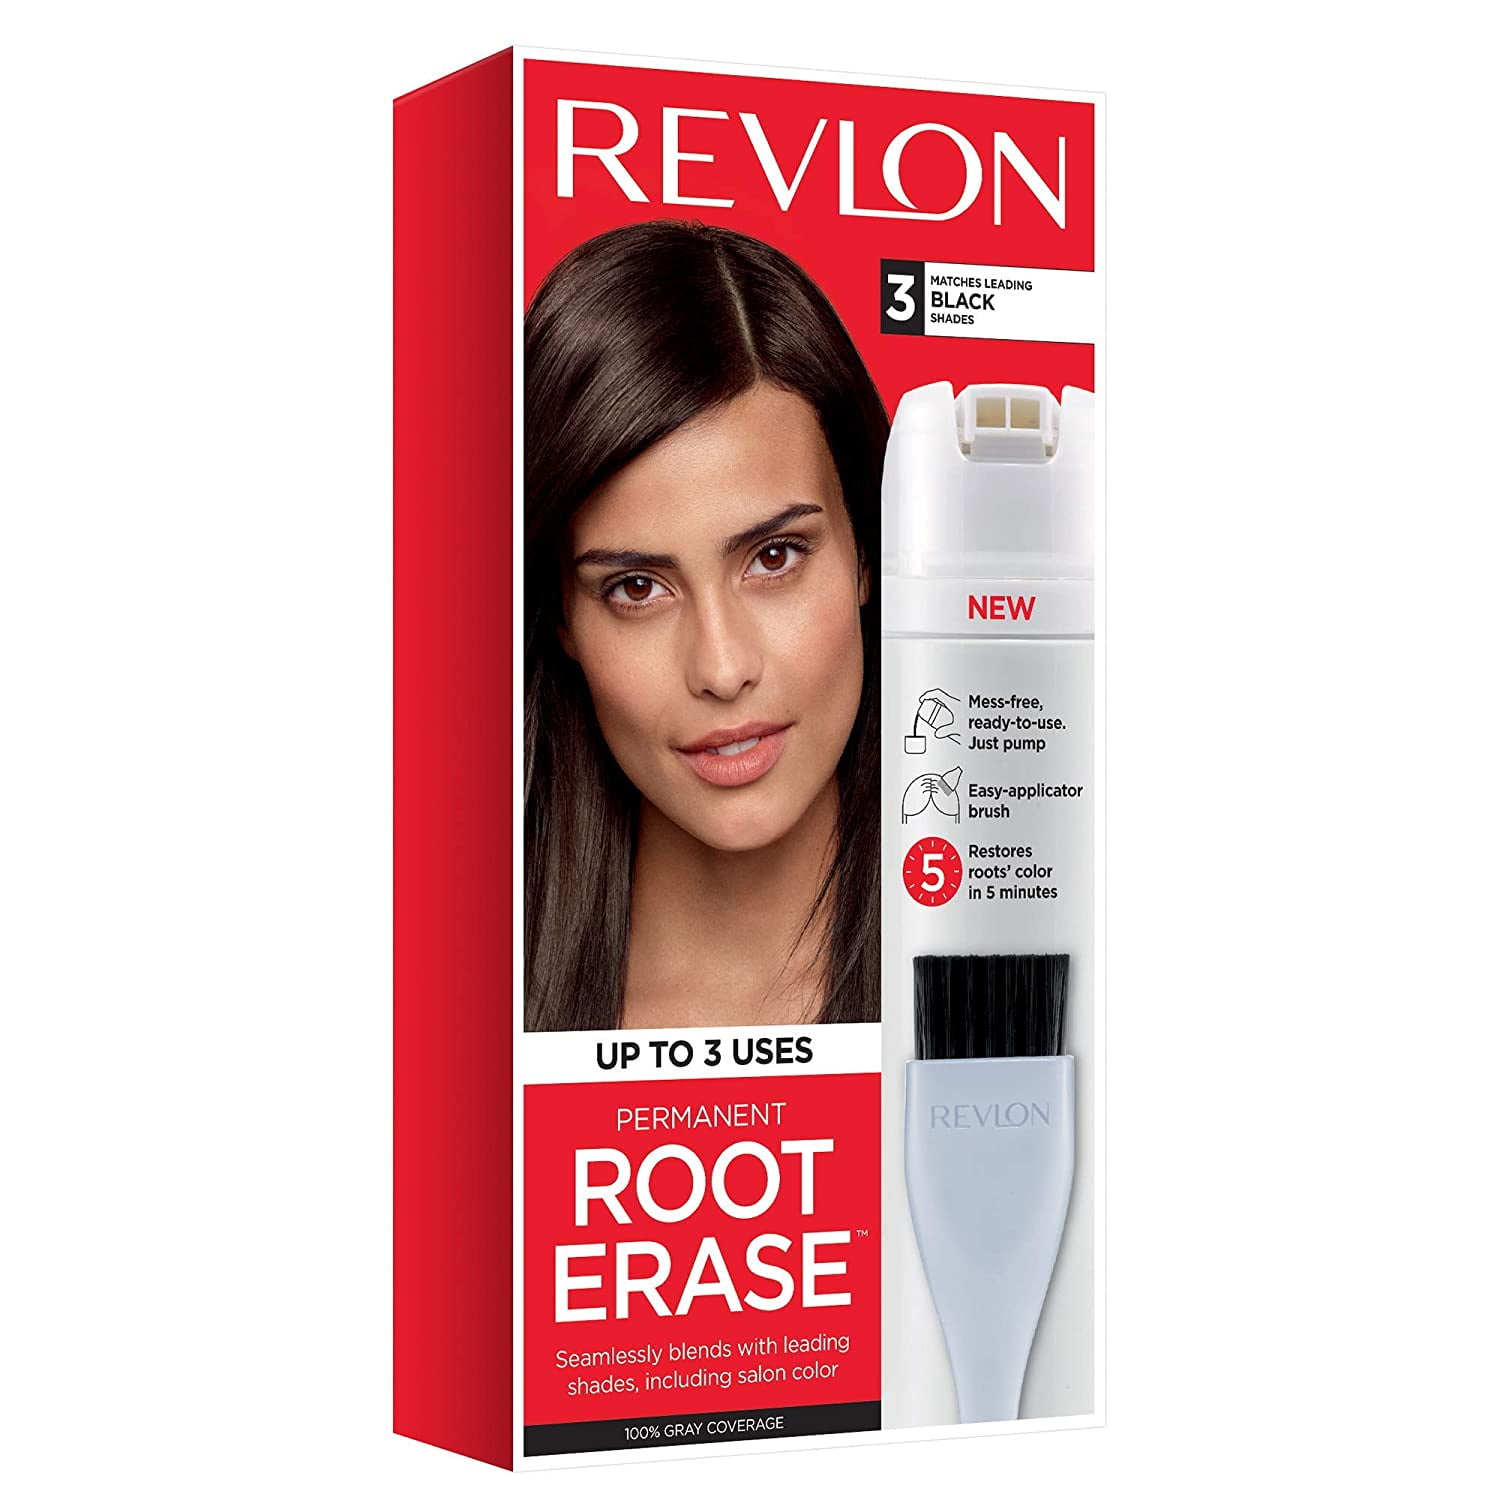 Revlon Root Erase Permanent Hair Color, Touchup Dye, 100% Gray Coverage, 3 Black